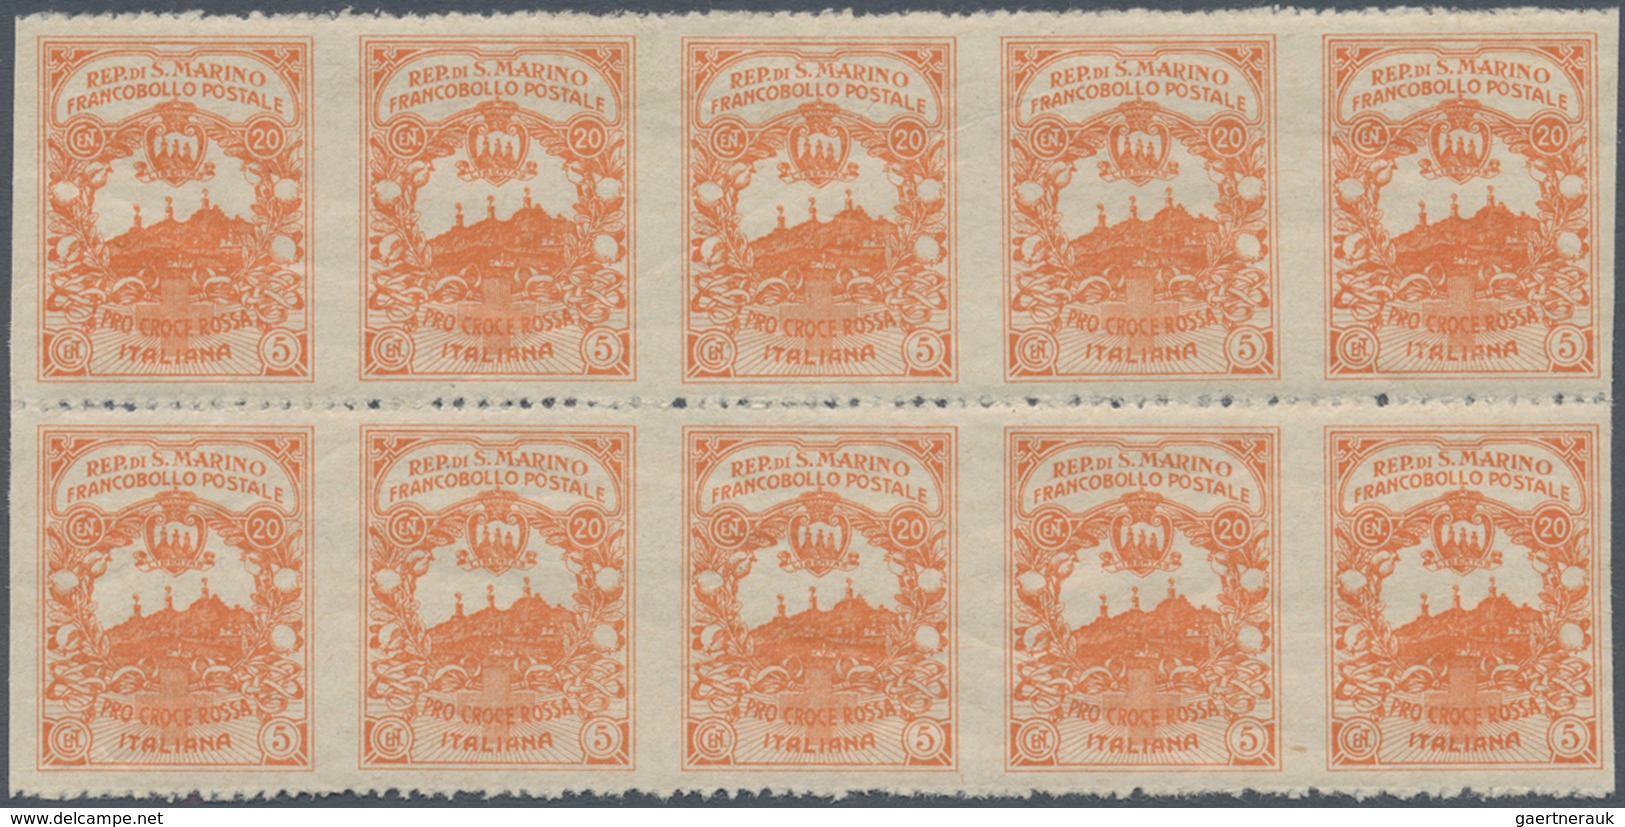 Thematik: Rotes Kreuz / Red Cross: 1916, San Marino. NON-ISSUED Stamp 20+5c, Orange, PRO CROCE ROSSO - Rotes Kreuz